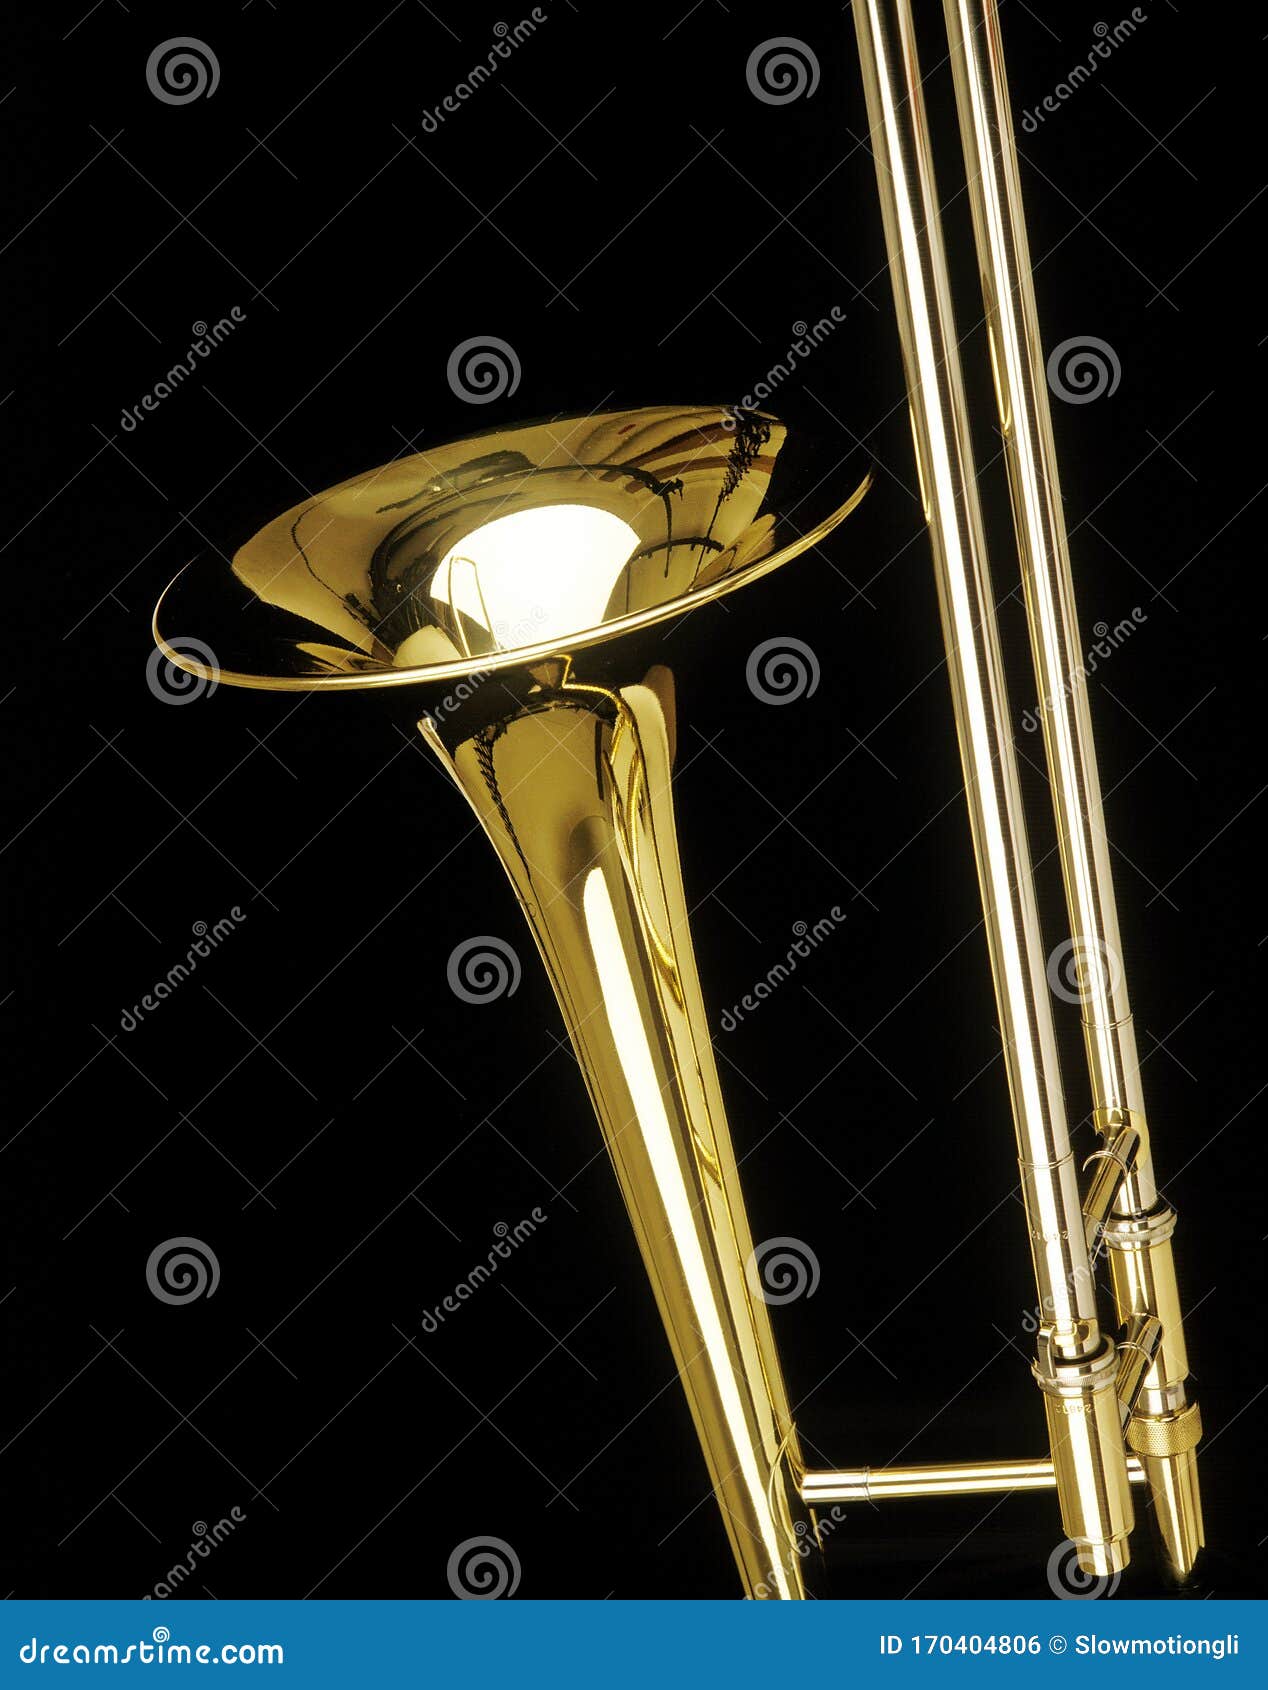 172 Valve Trombone Photos Free Royalty Free Stock Photos From Dreamstime